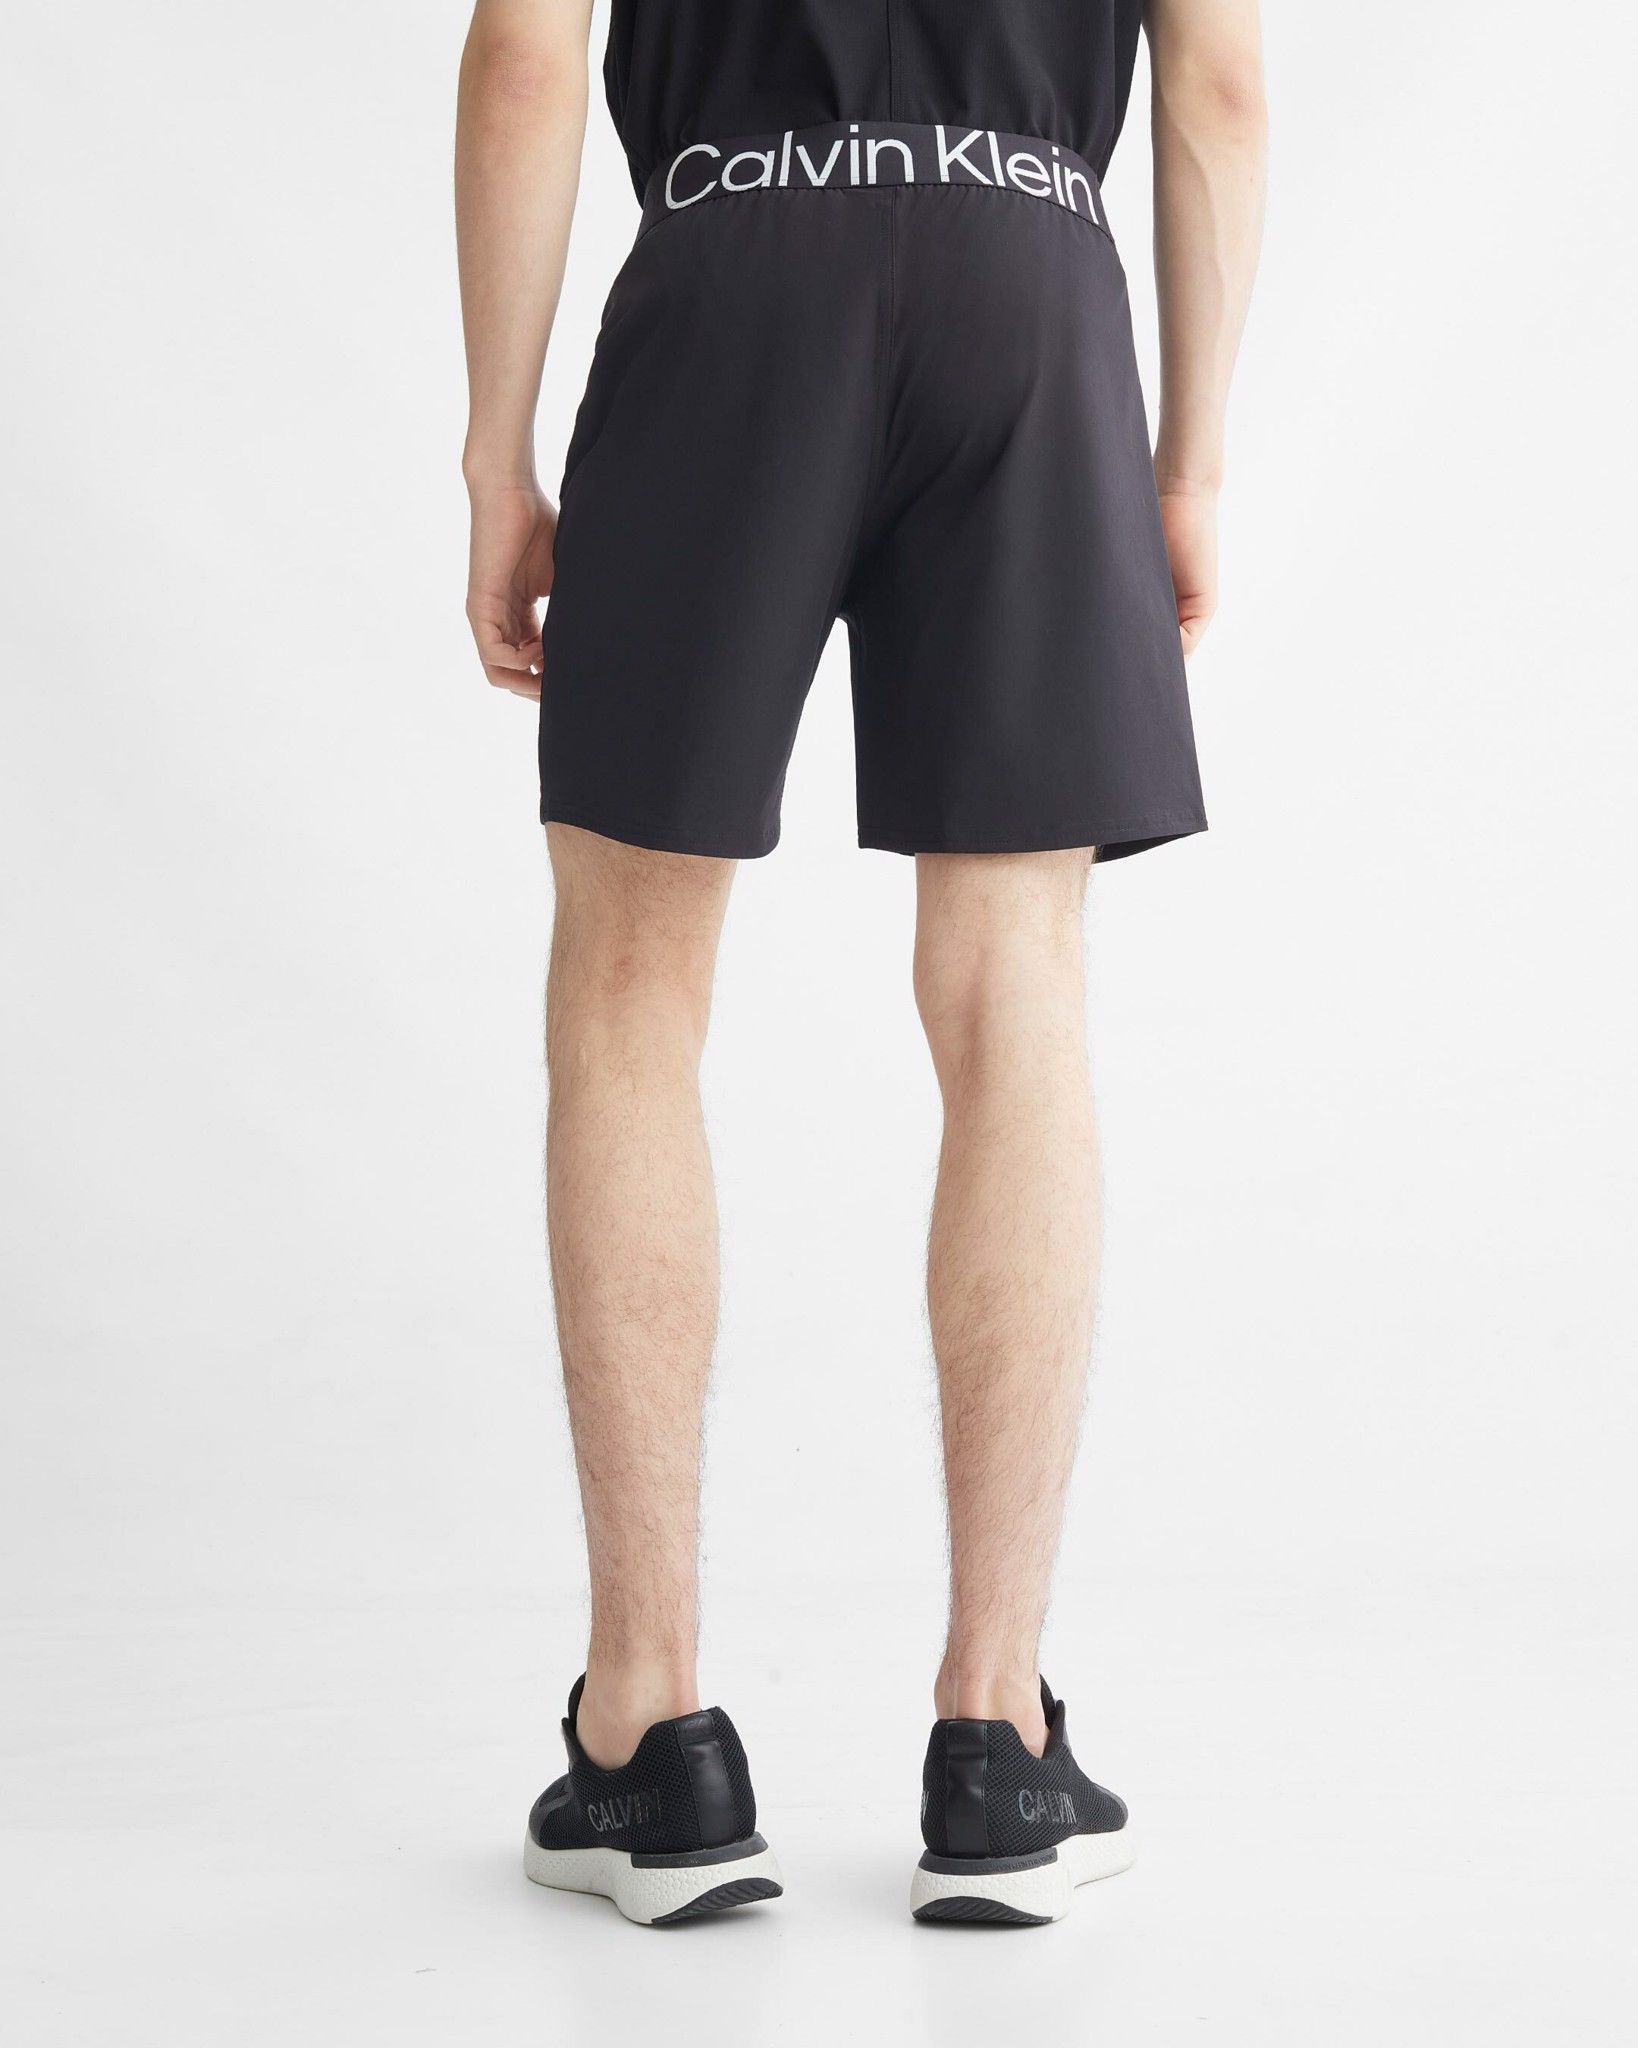 Descubrir 42+ imagen calvin klein gym shorts